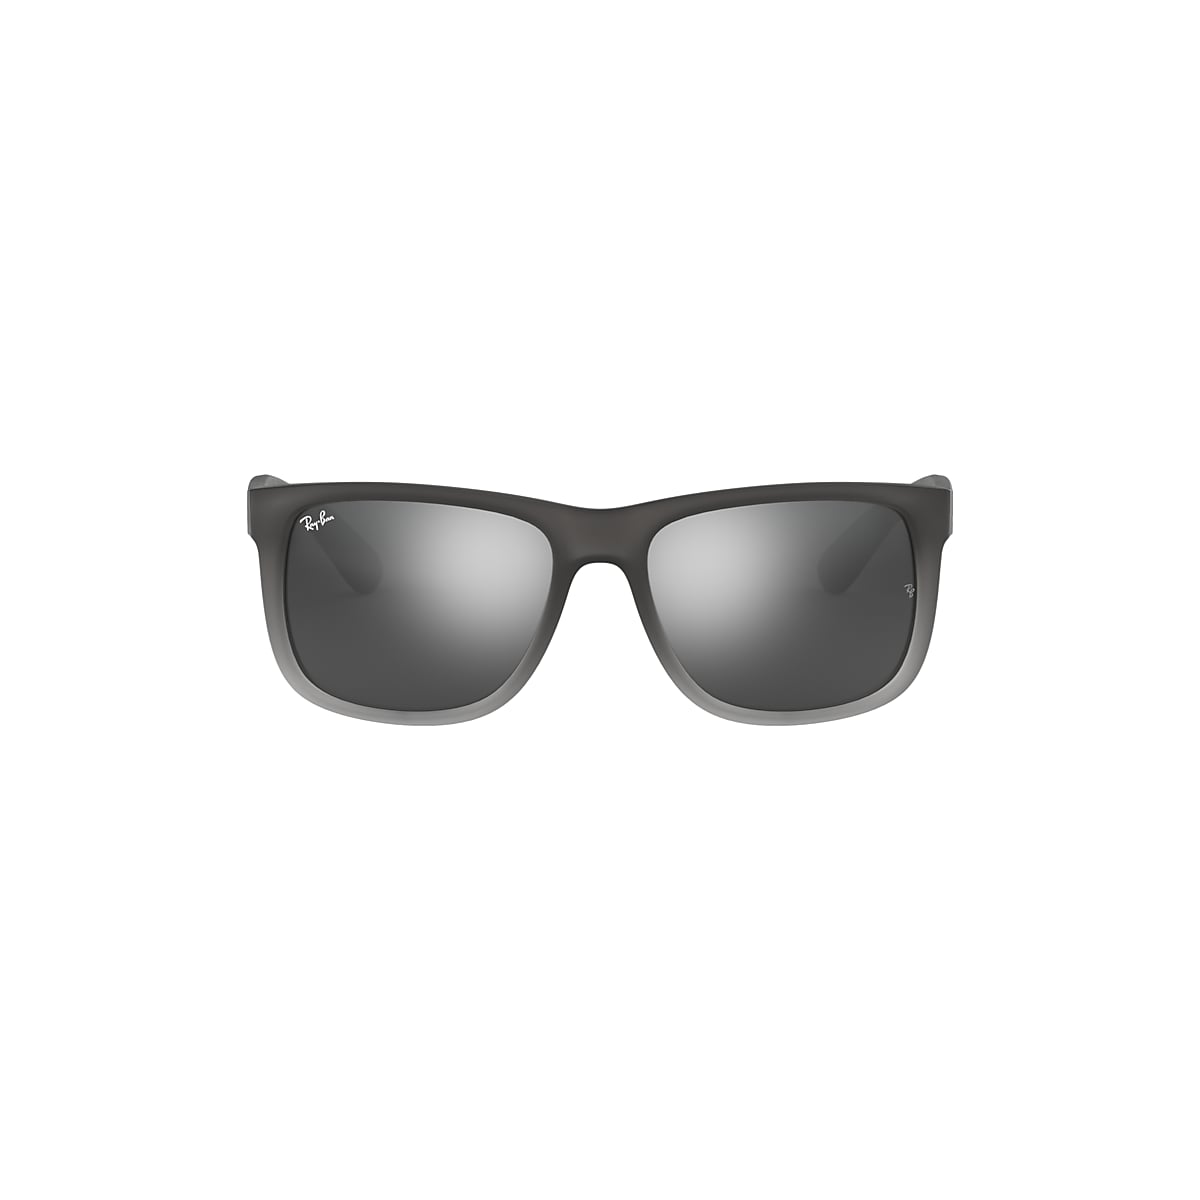 JUSTIN CLASSIC Sunglasses in Black and Dark Grey - RB4165